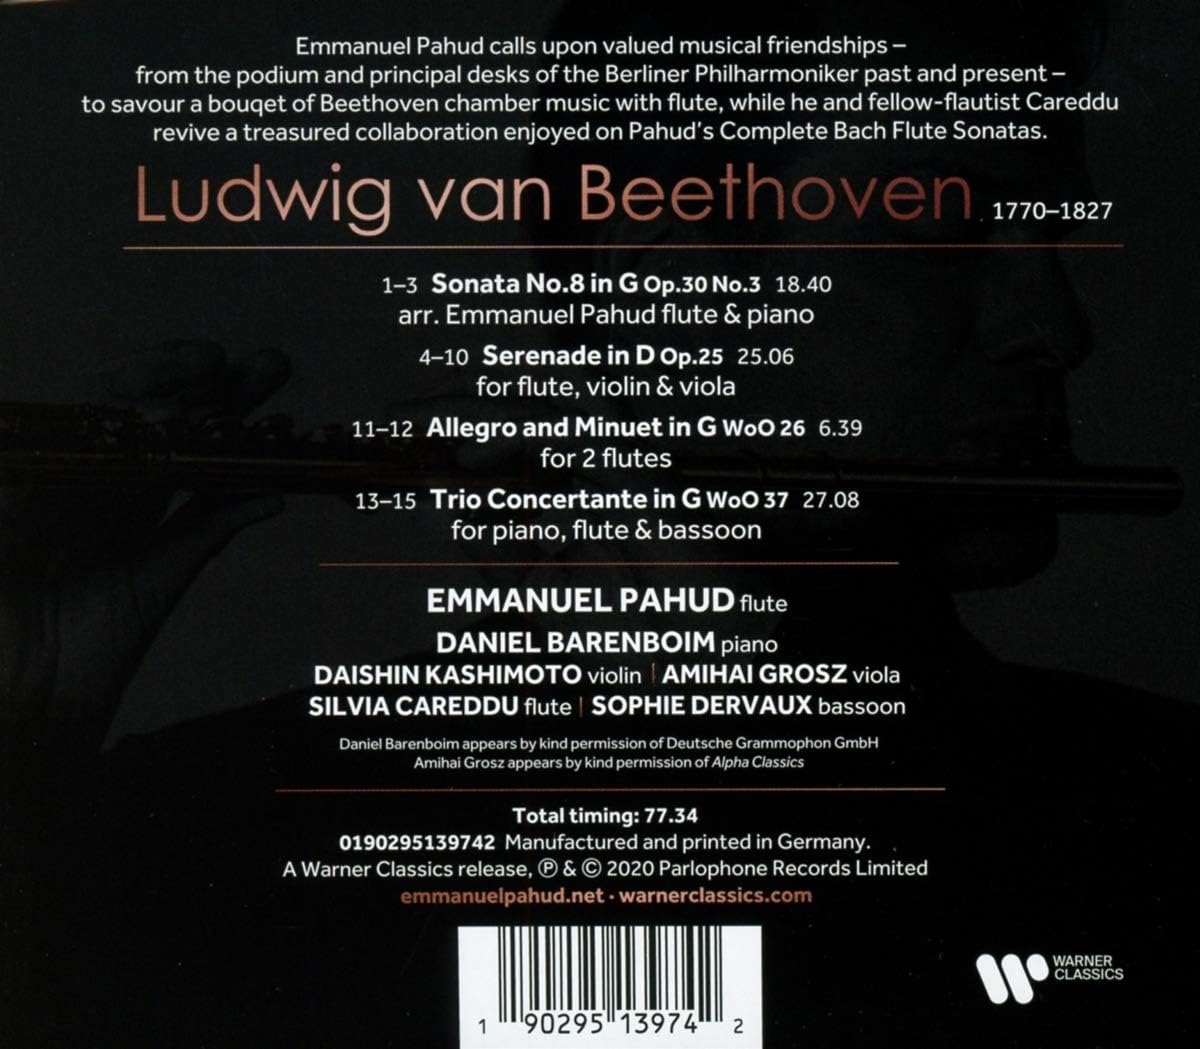 Beethoven | Emmanuel Pahud, Daniel Barenboim, Daishin Kashimoto, Amichai Grosz, Silvia Careddu, Sophie Dervaux